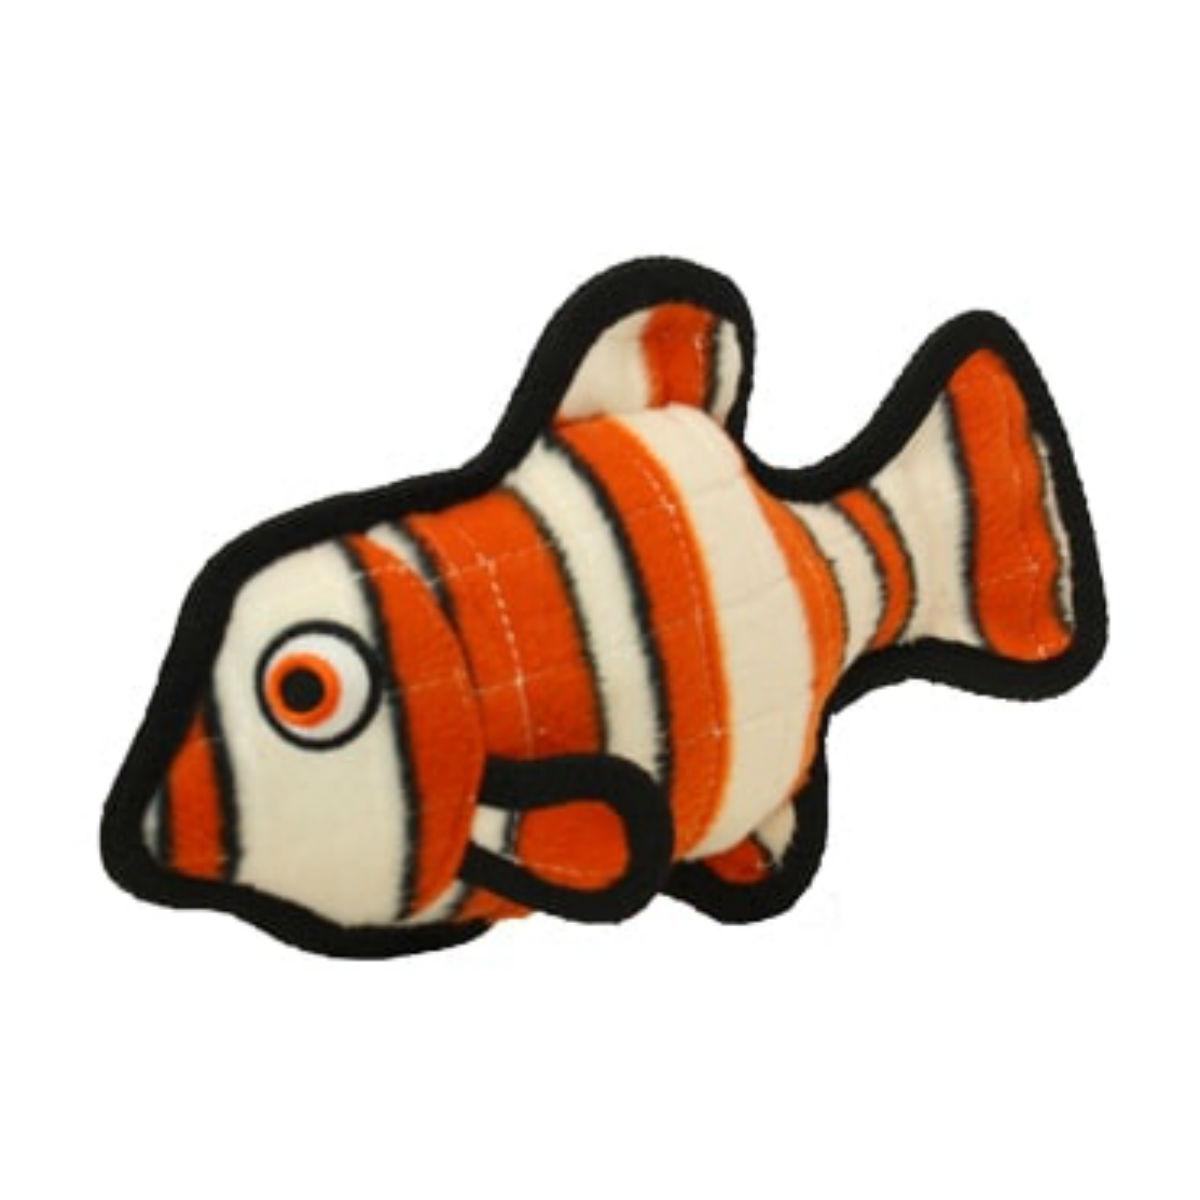 Tuffy Ocean Creatures Dog Toy - Orange Fish